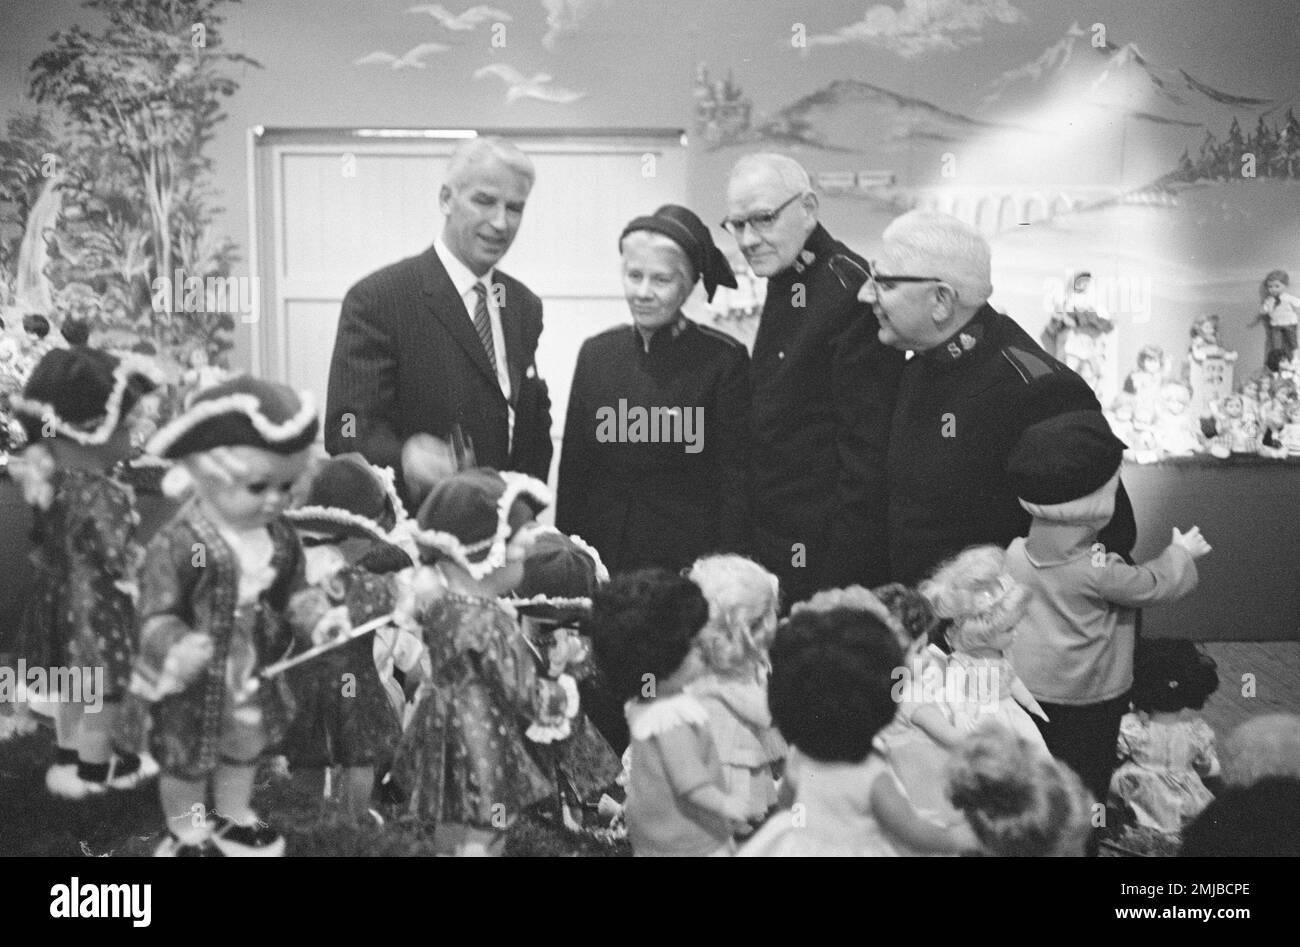 Netherland History: 75 years Albert Heijn Supermarket Chain (Netherlands) - Miss Crok with dolls; Date: May 28, 1962 Stock Photo